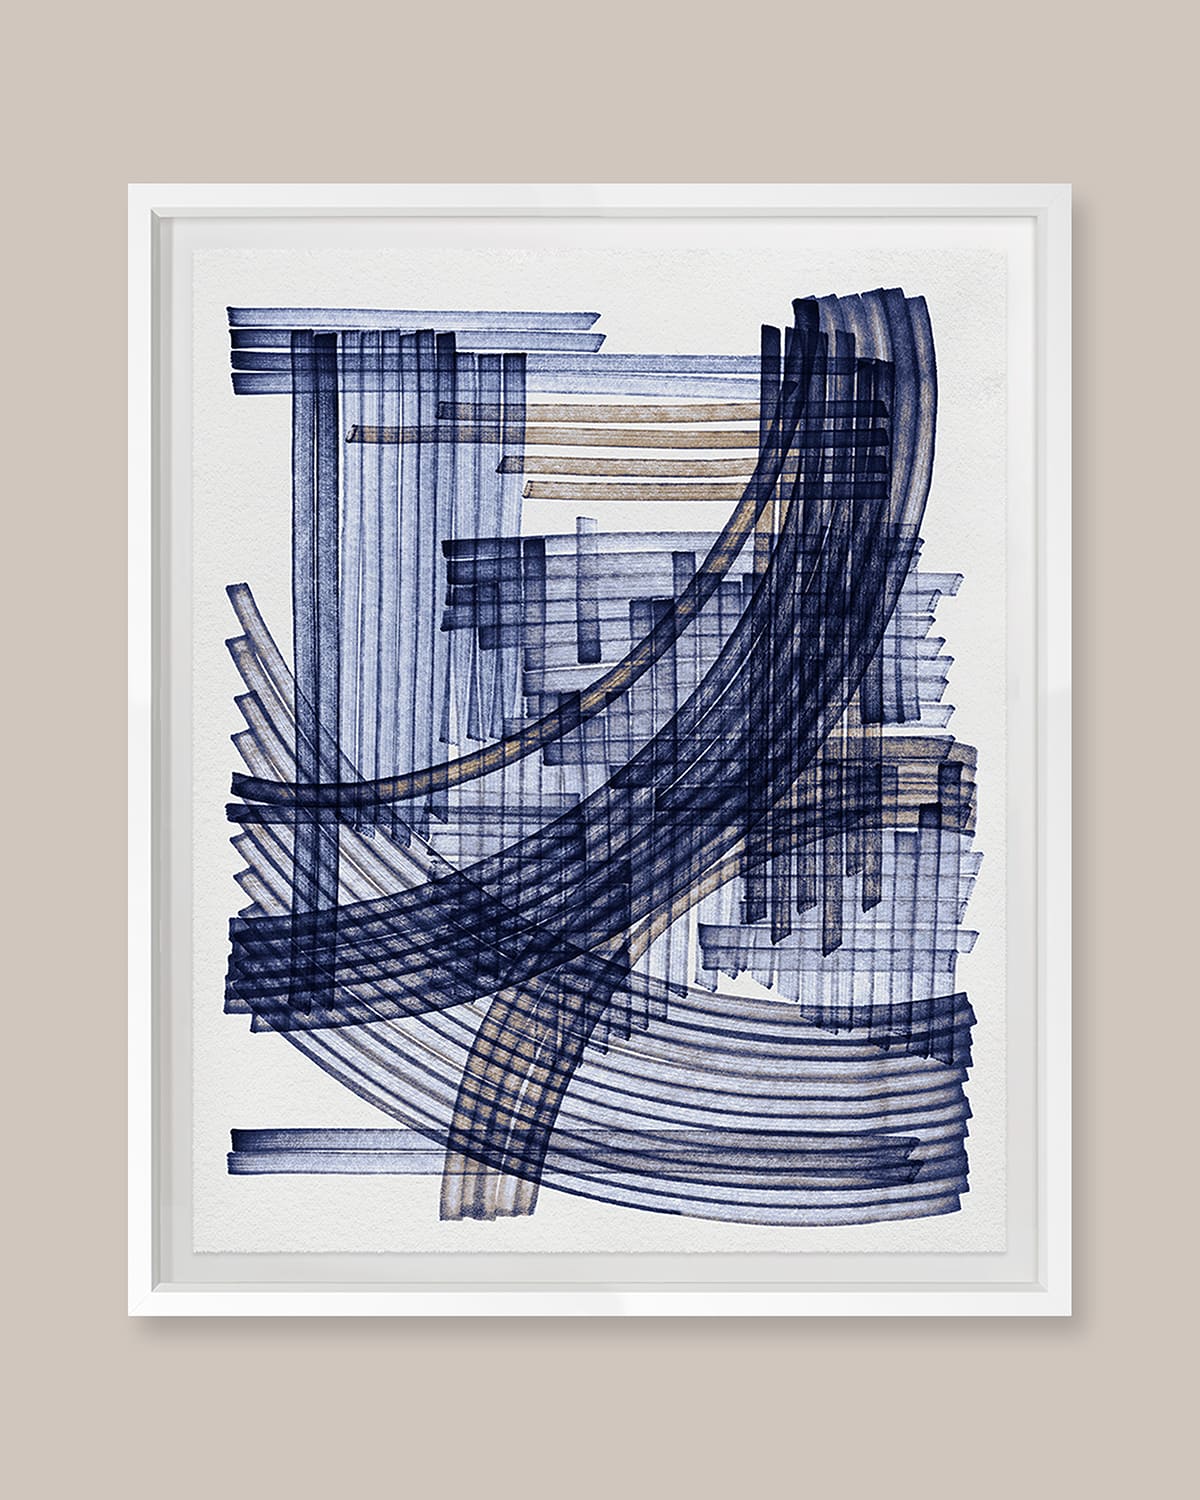 Grand Image Home Blue Weave 3 Digital Art Print By Victoria Neiman In White